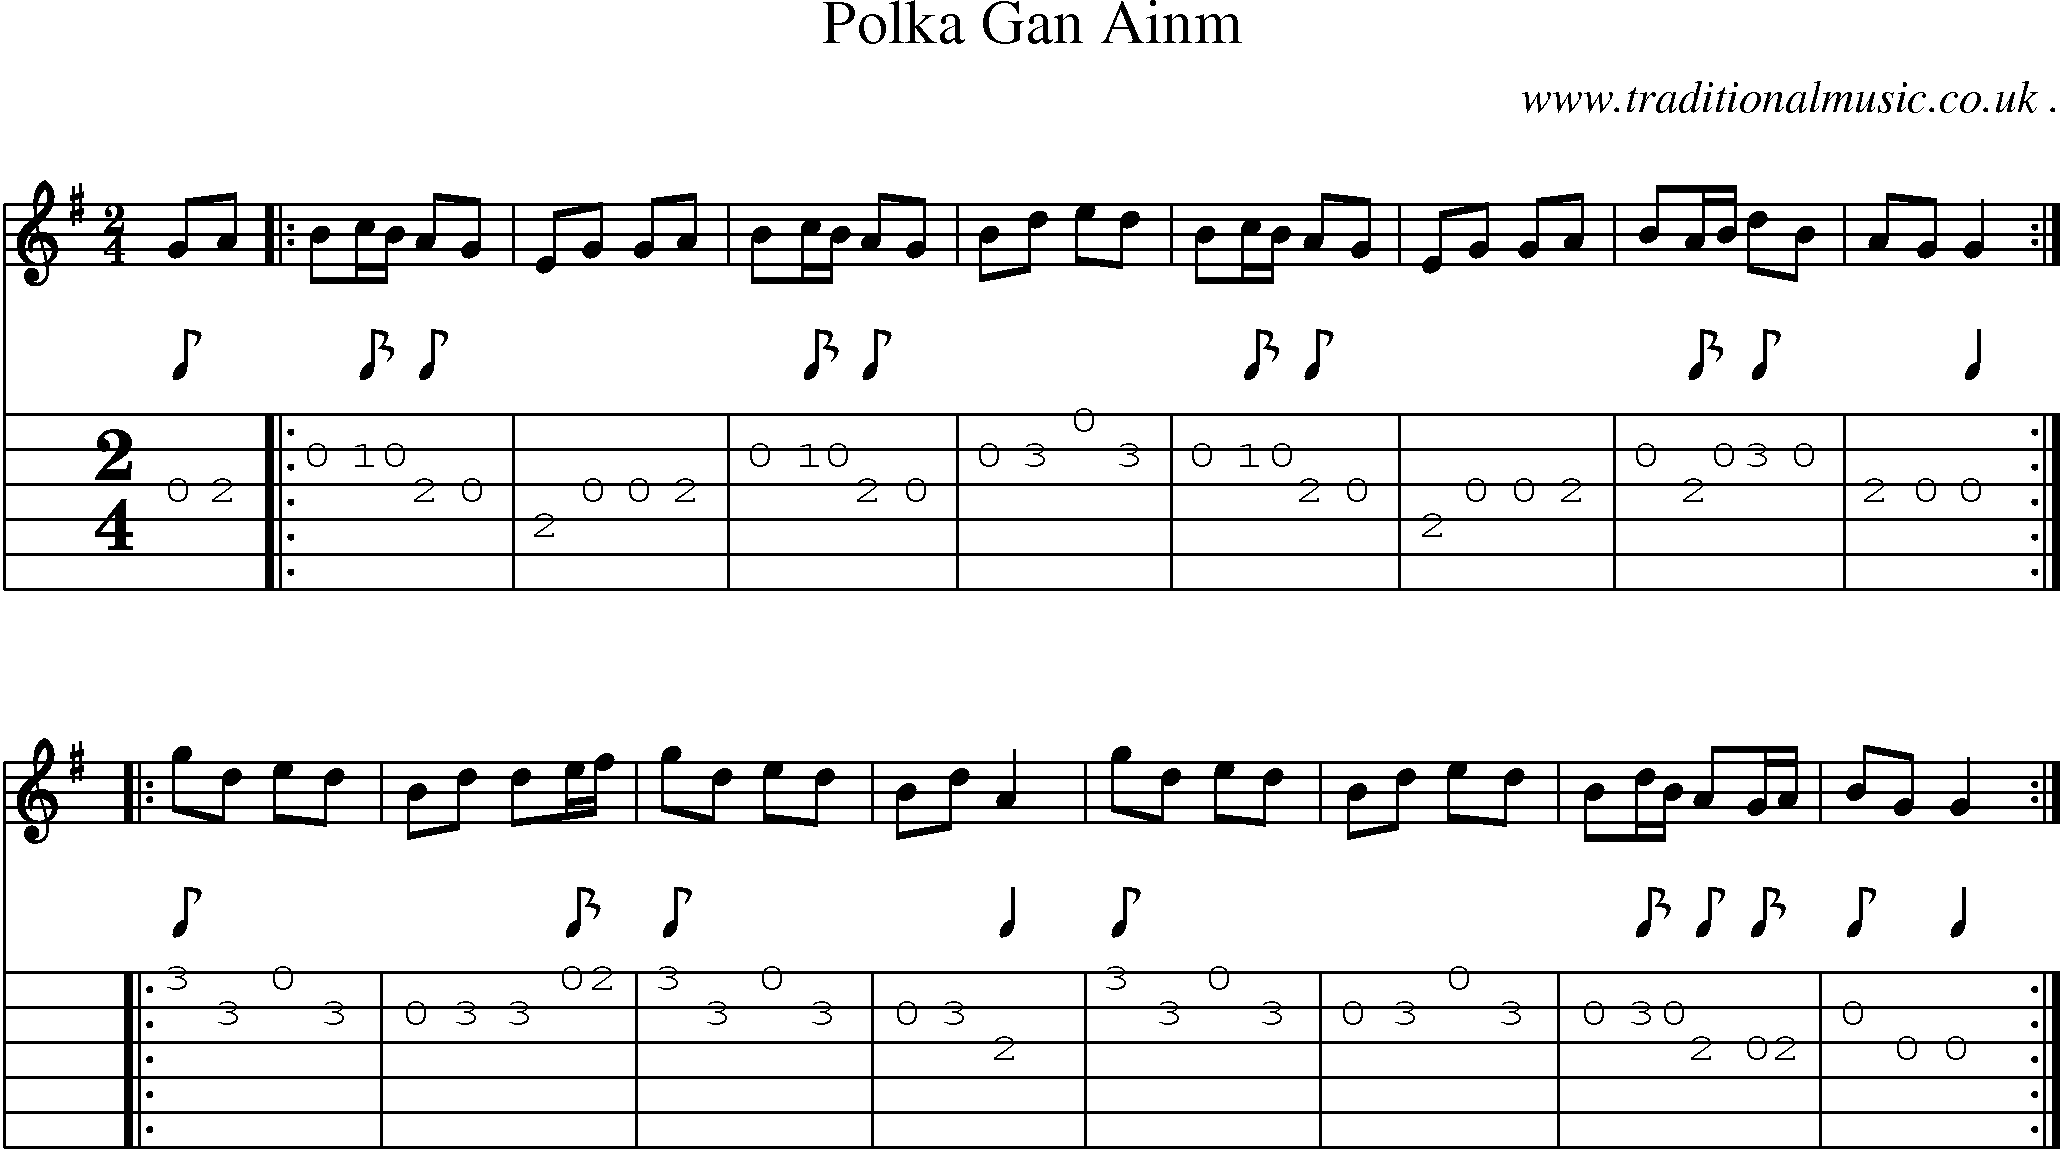 Sheet-Music and Guitar Tabs for Polka Gan Ainm